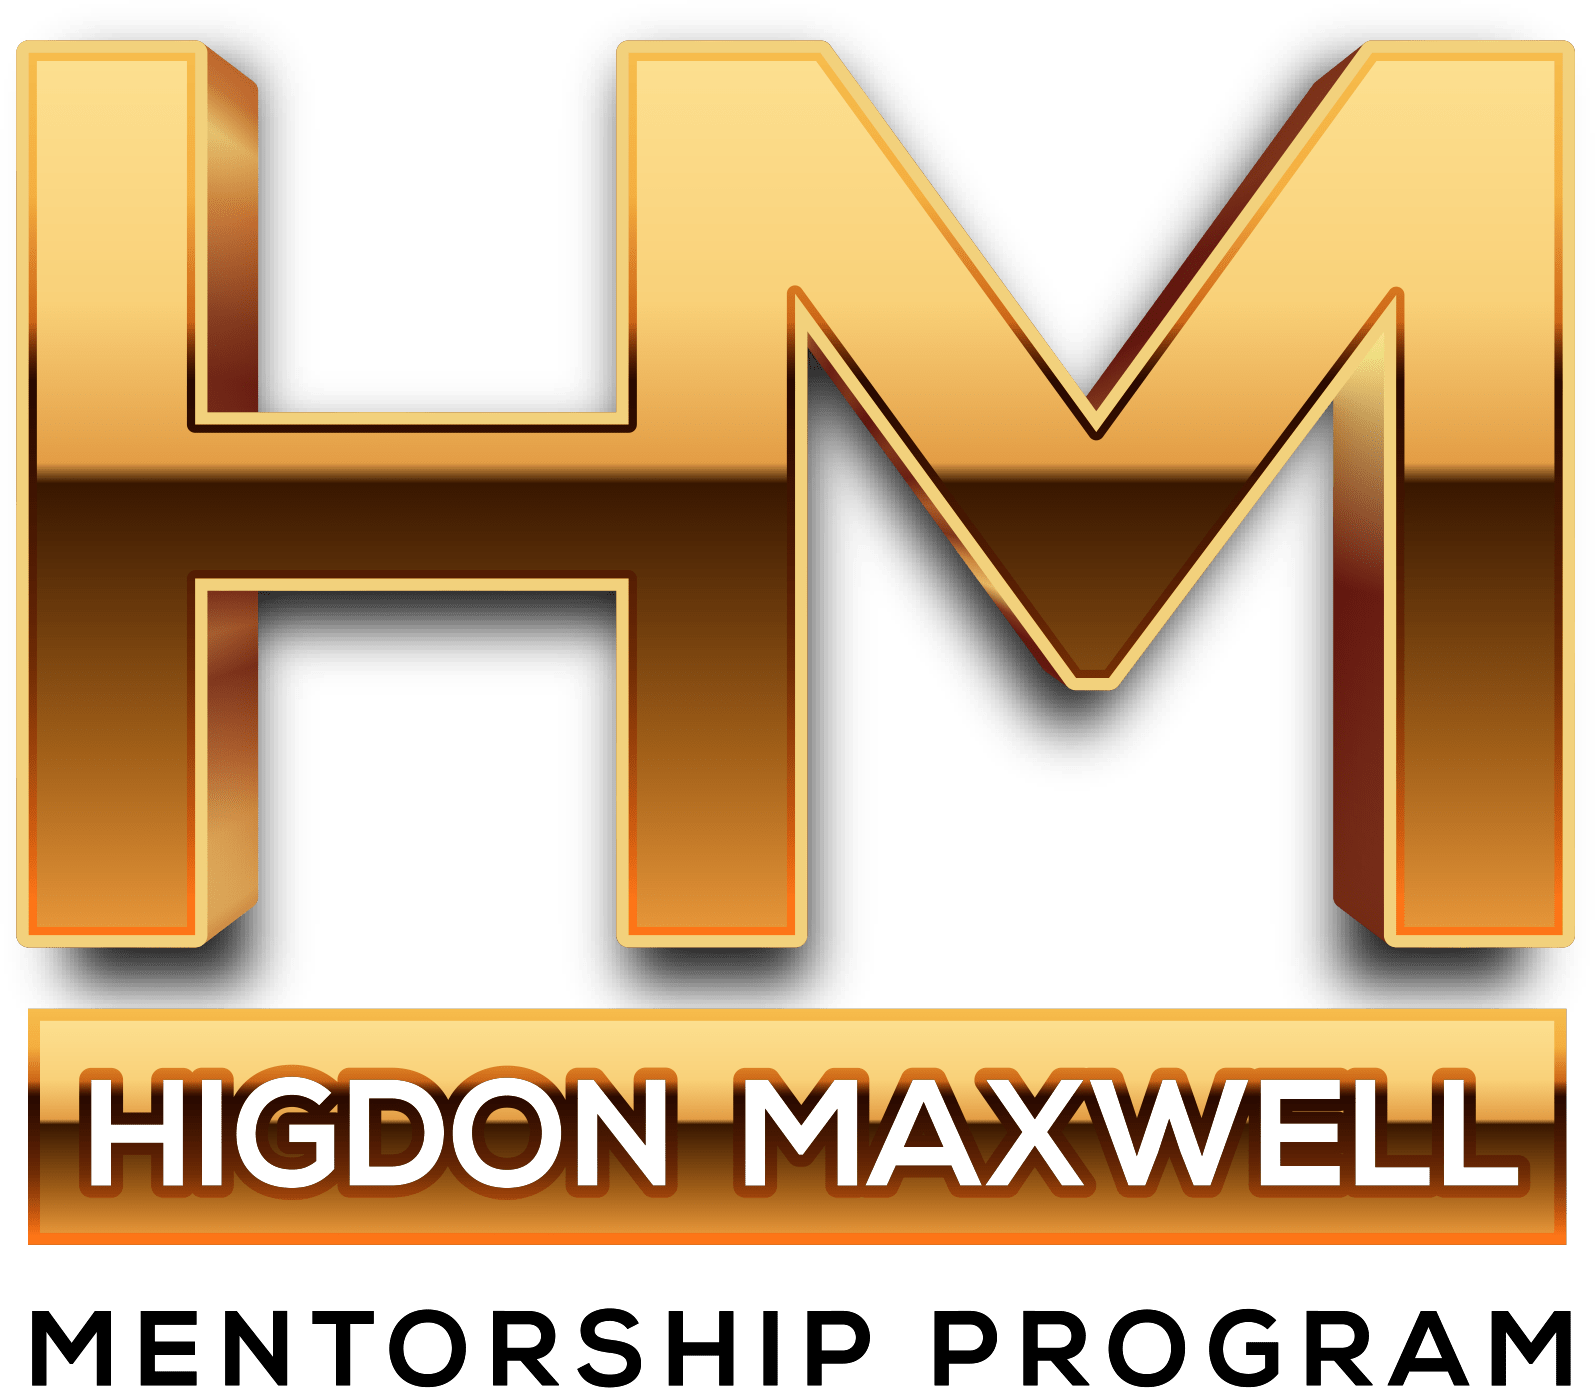 The Higdon Maxwell Mentorship Program